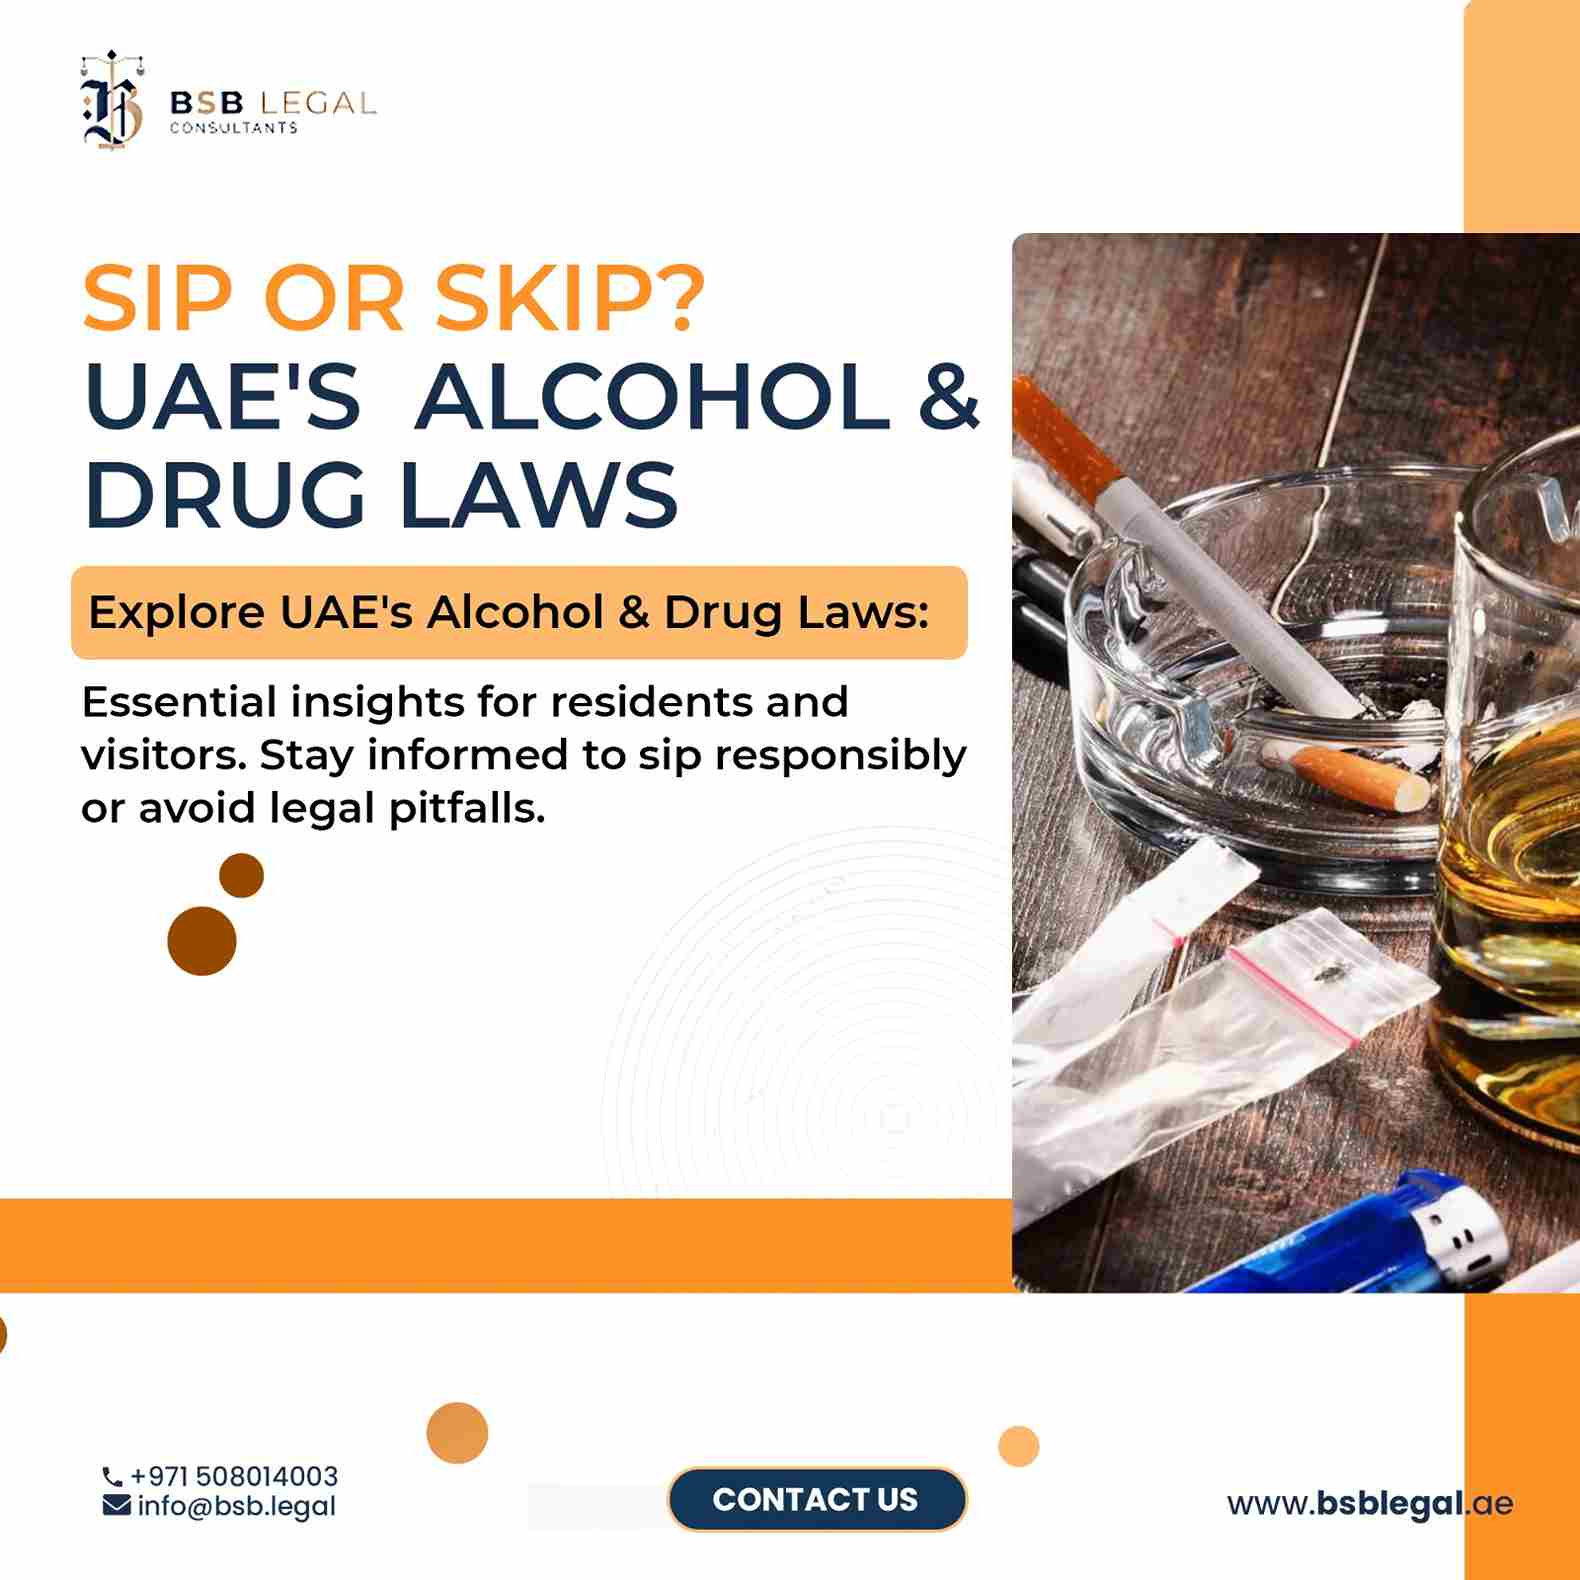 UAE's Alcohol & Drug Laws